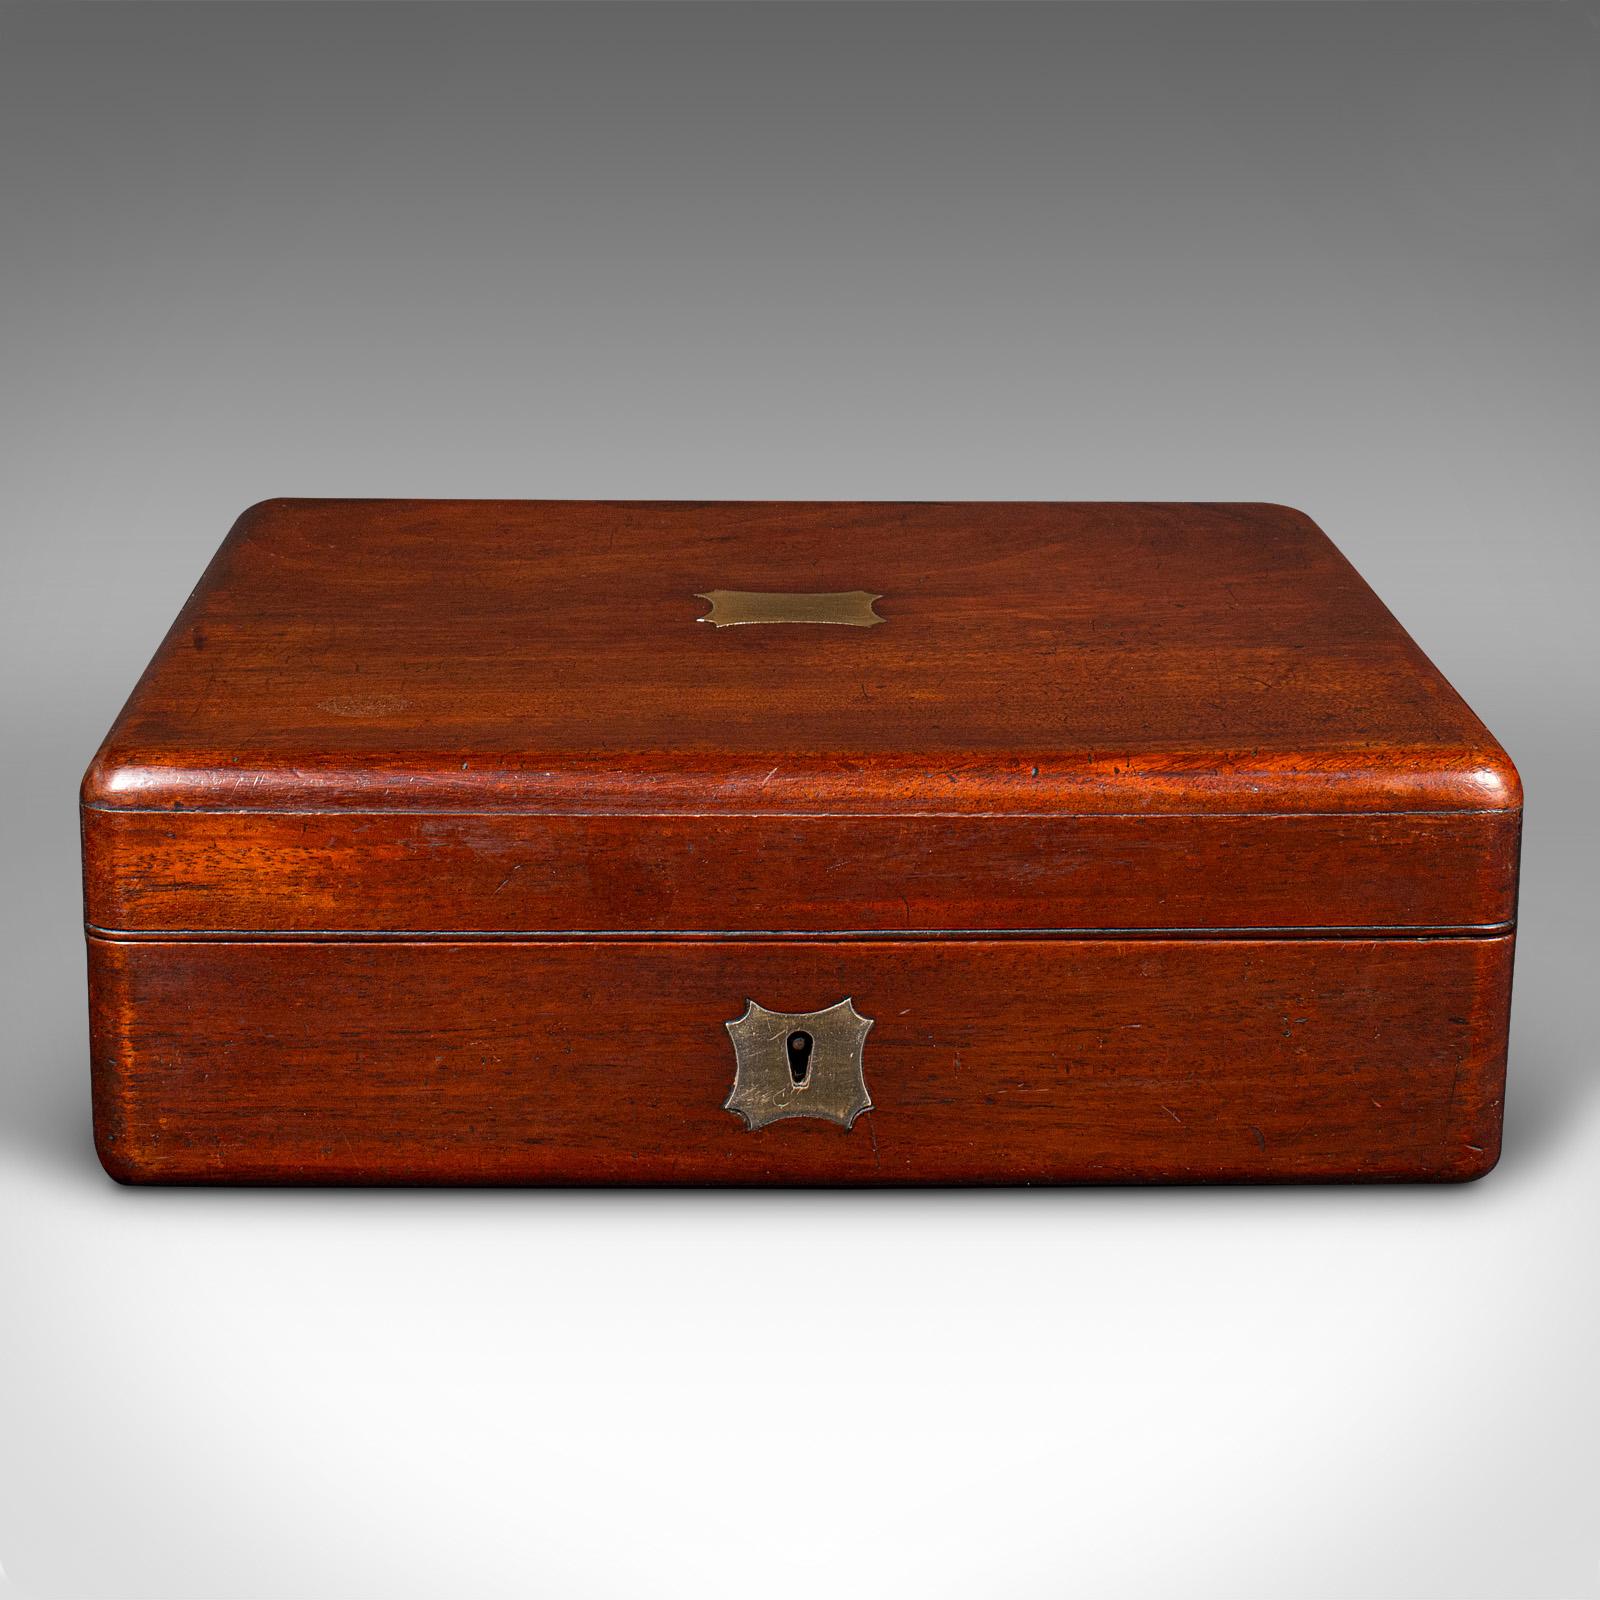 British Small Antique Lined Jewellery Box, English, Keepsake Case, Victorian, Circa 1860